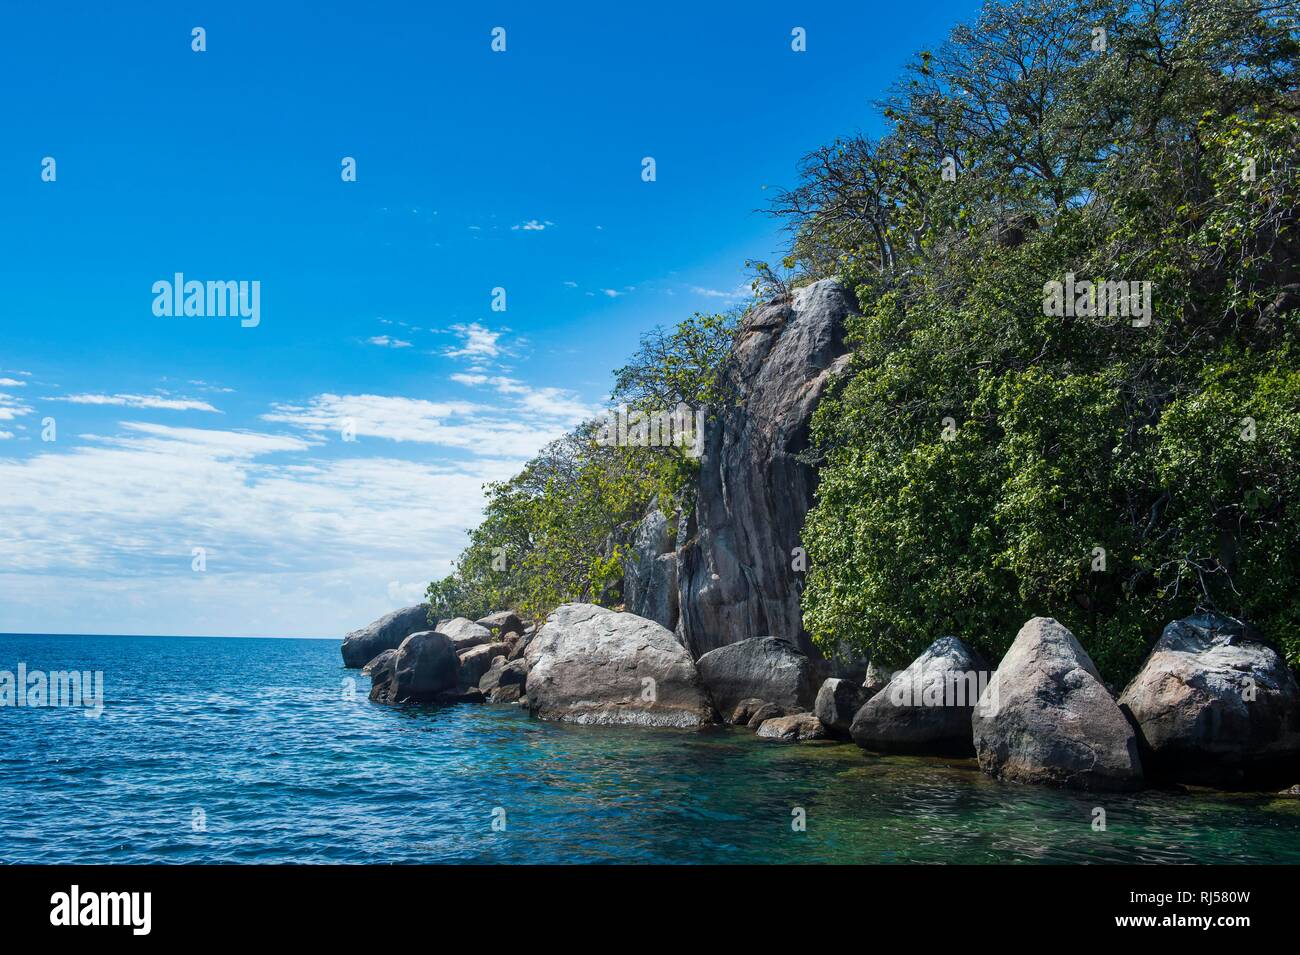 Granite outcrops on Mumbo island, Cape Maclear, Lake Malawi, Malawi Stock Photo